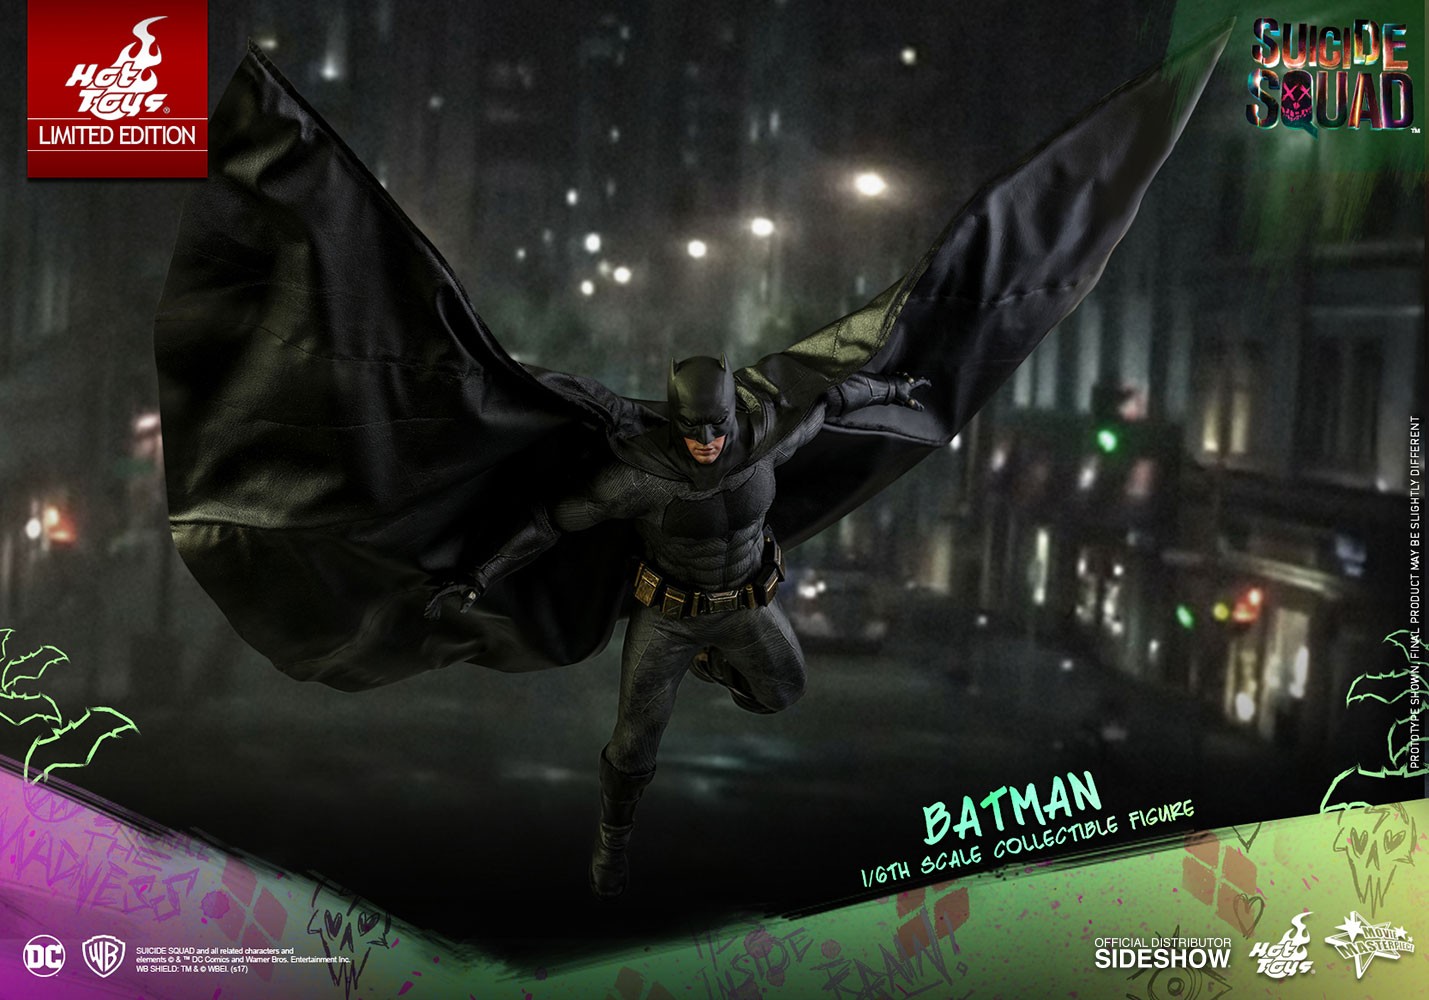 Batman Exclusive Edition (Prototype Shown) View 1